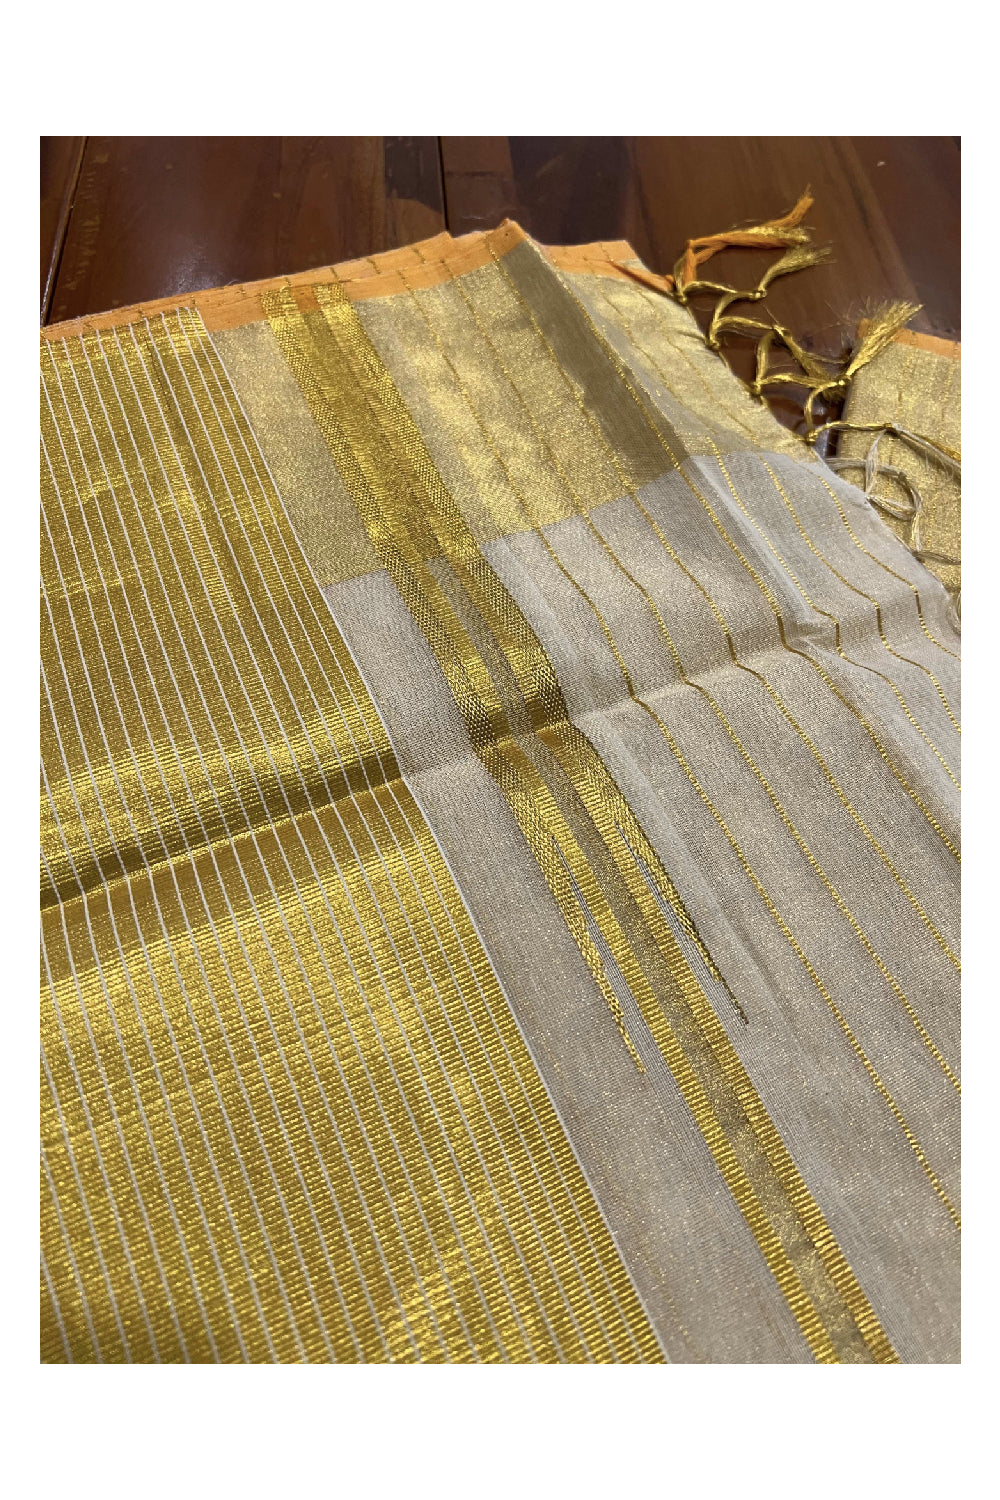 Southloom Balaramapuram Handloom Stripes Work Tissue Saree with 5 inch Lines Pallu